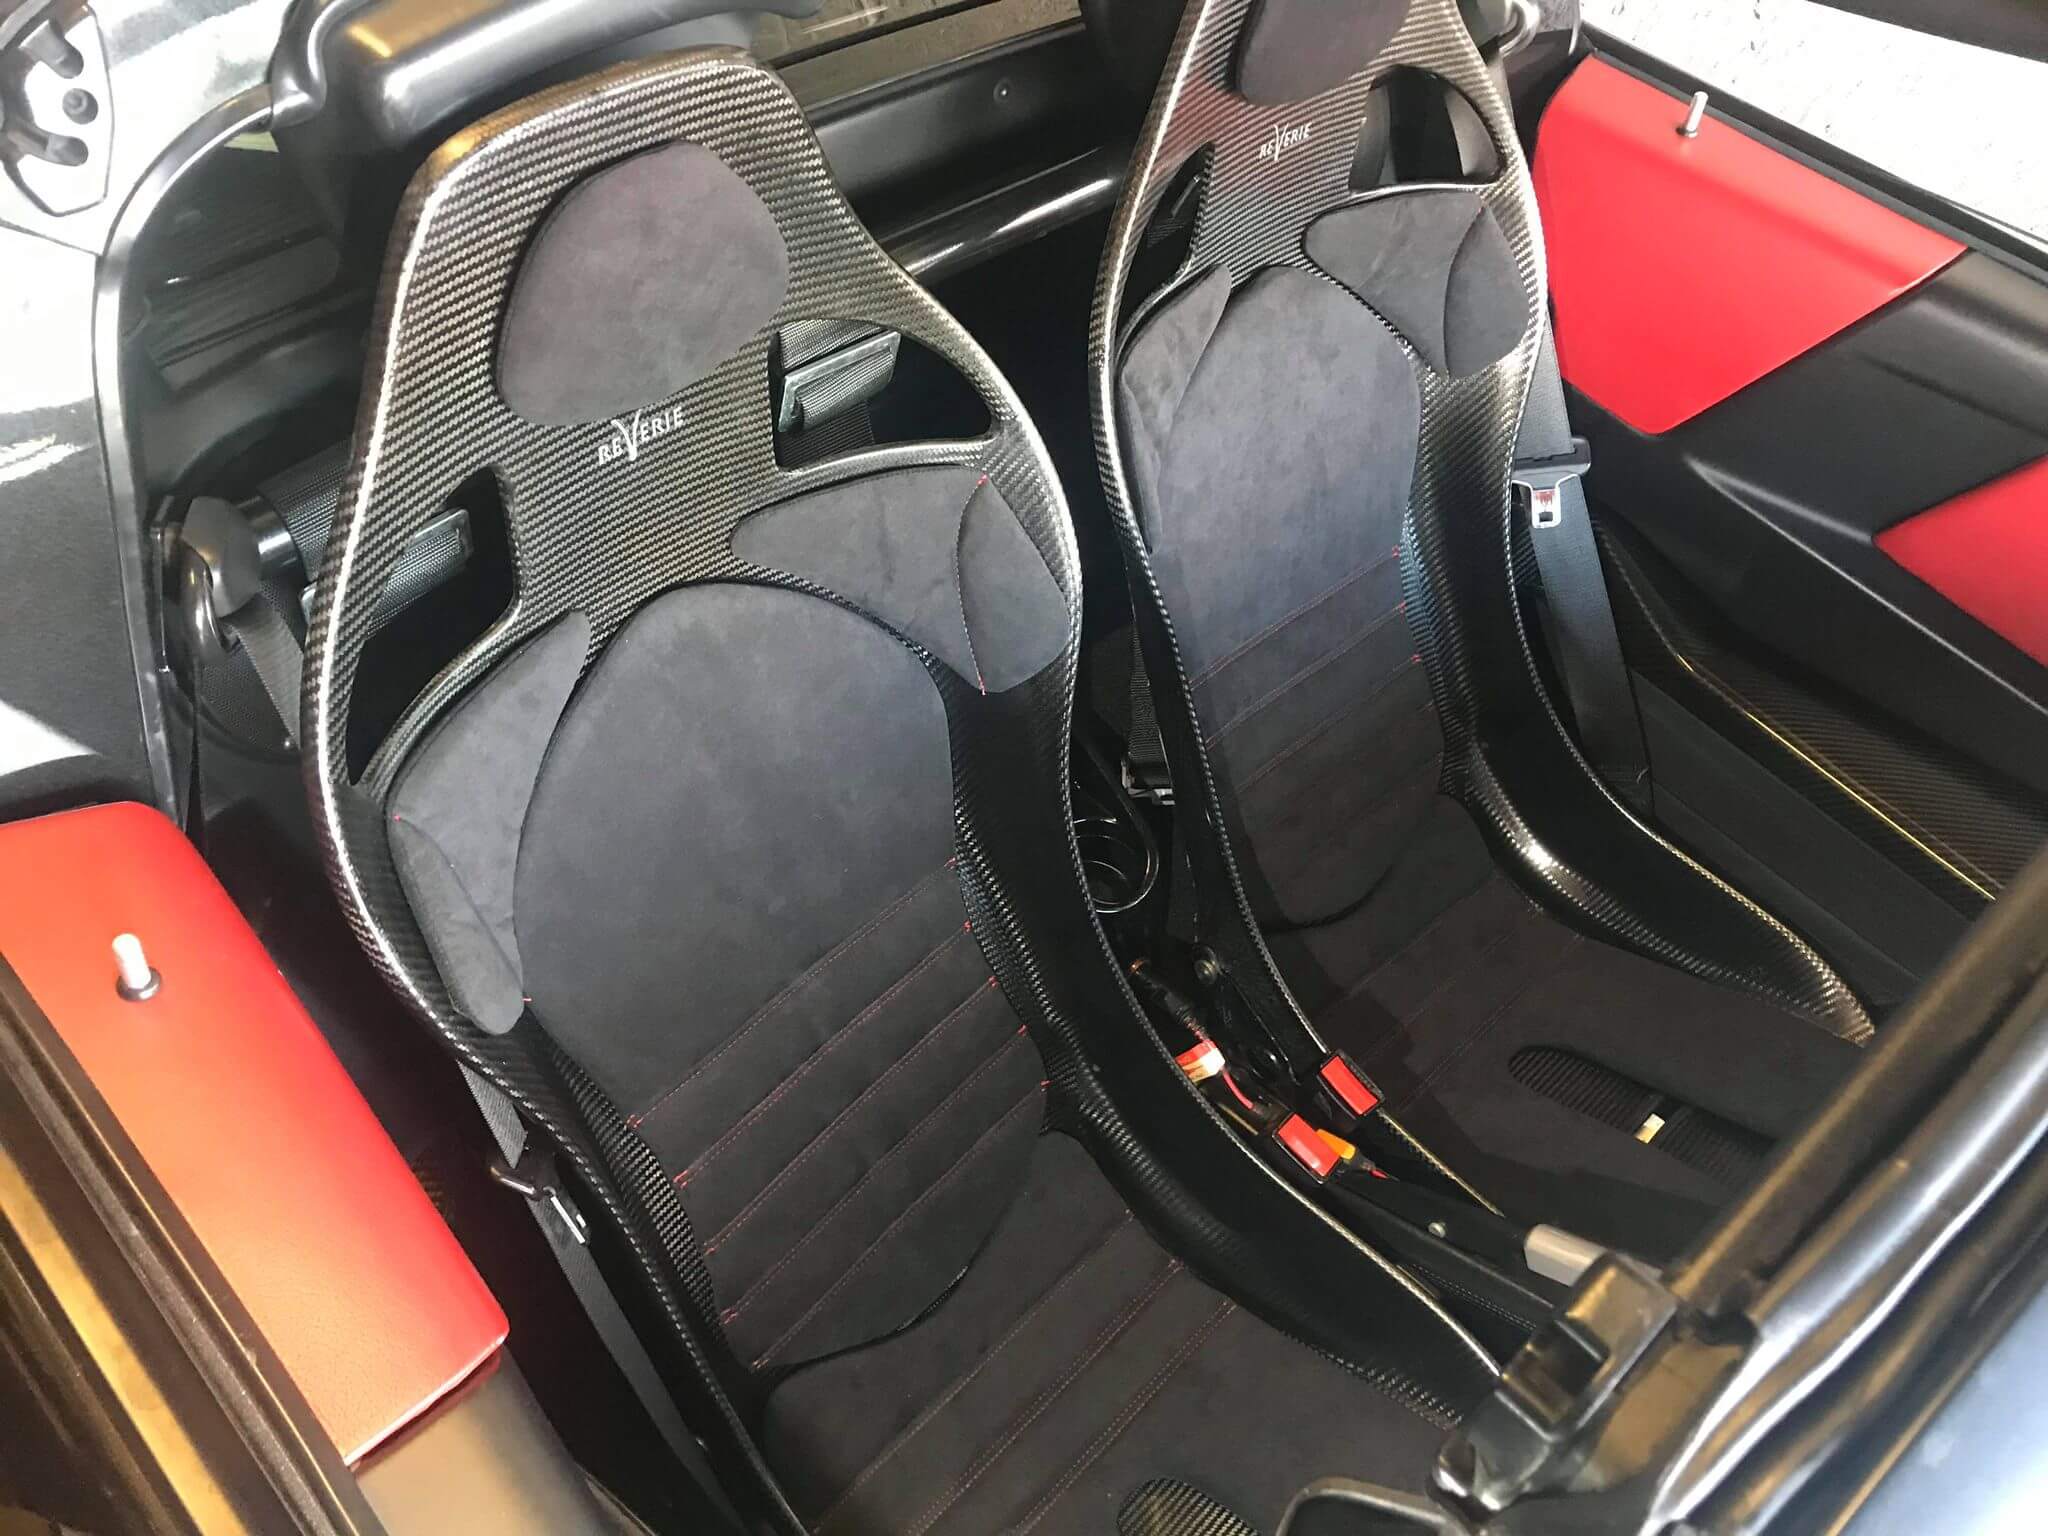 Two black carbon seats